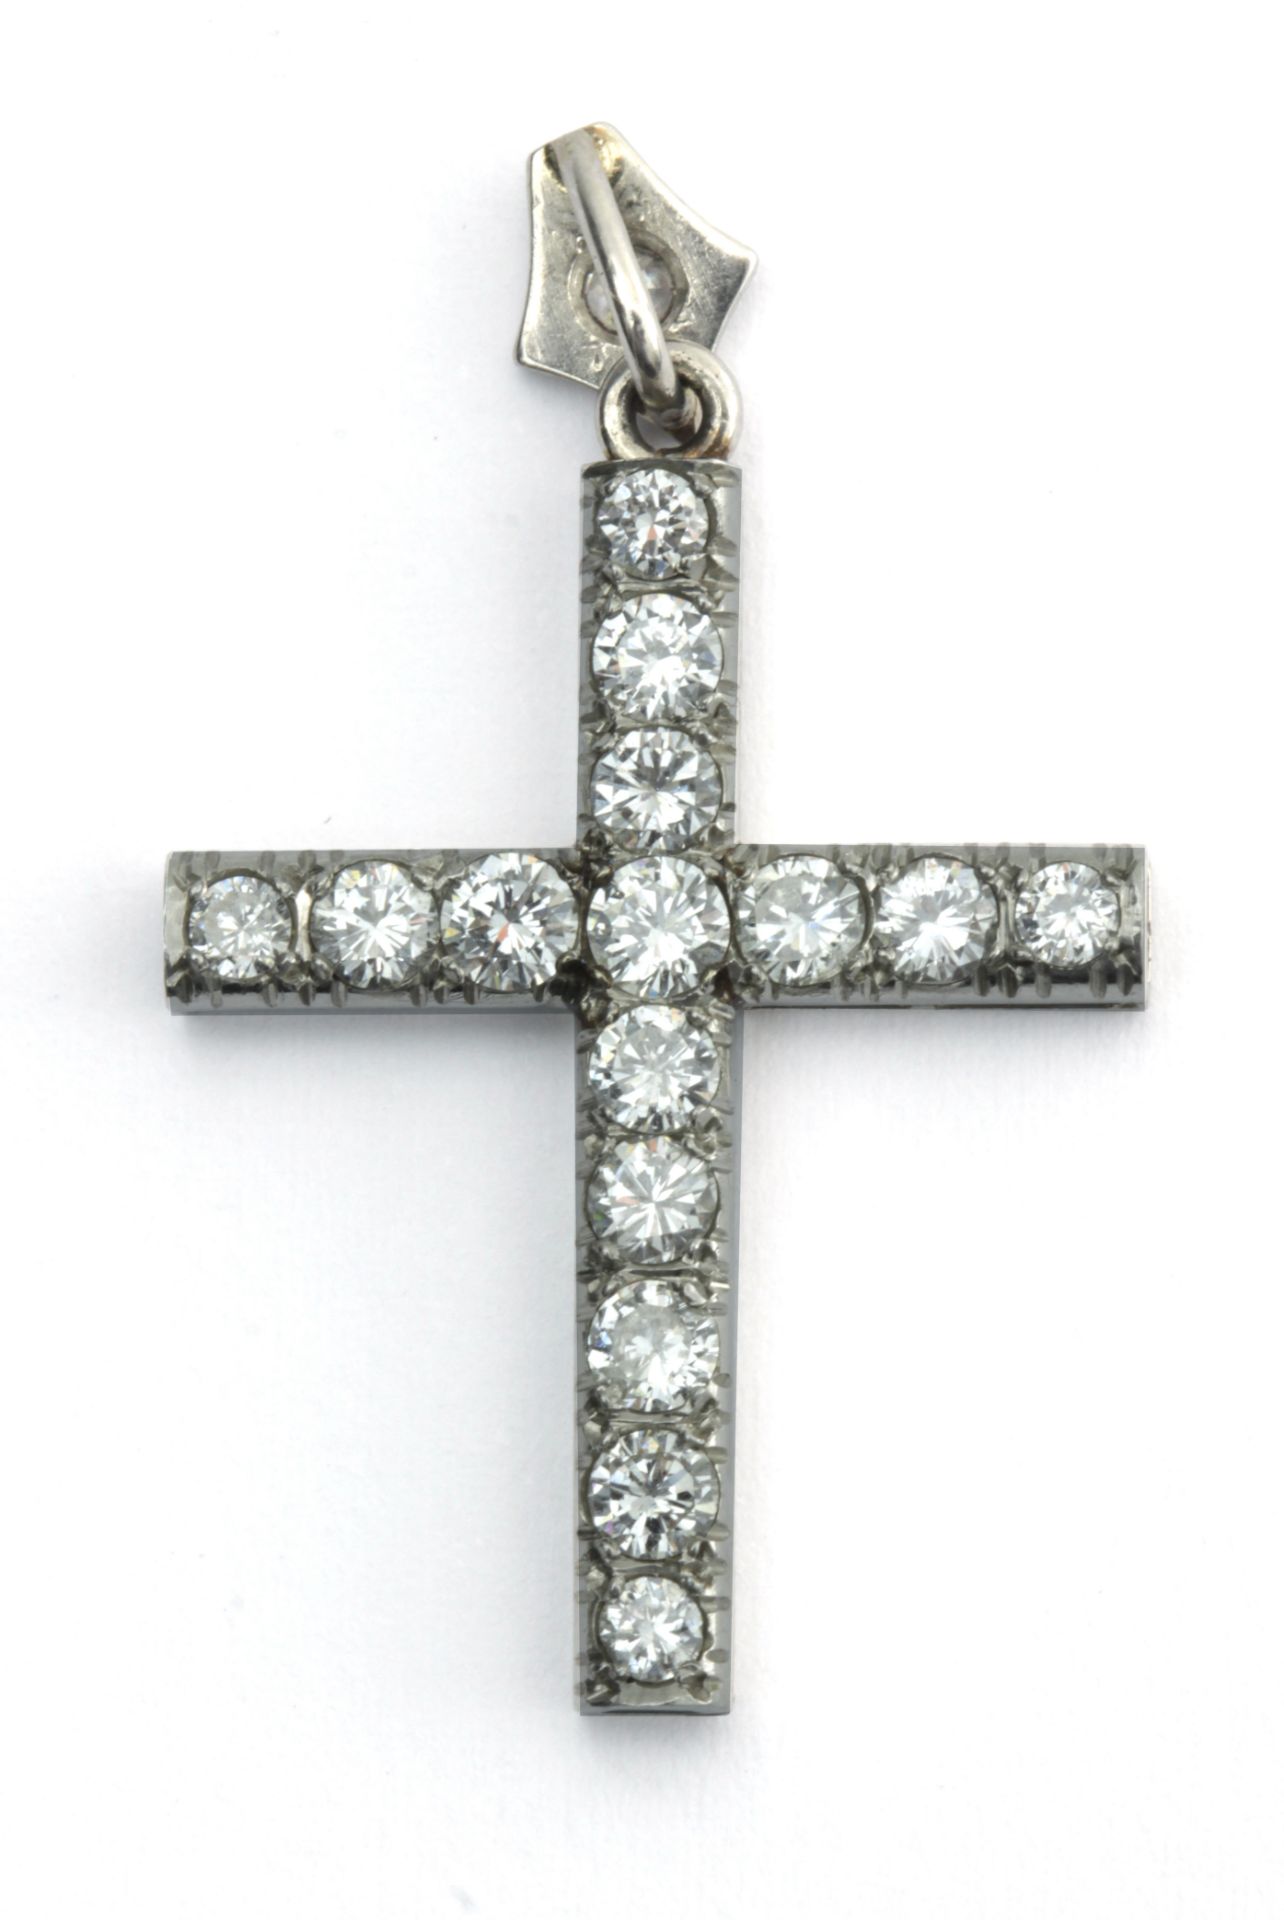 A brilliant cut diamond pendant cross in an 18k. white gold setting